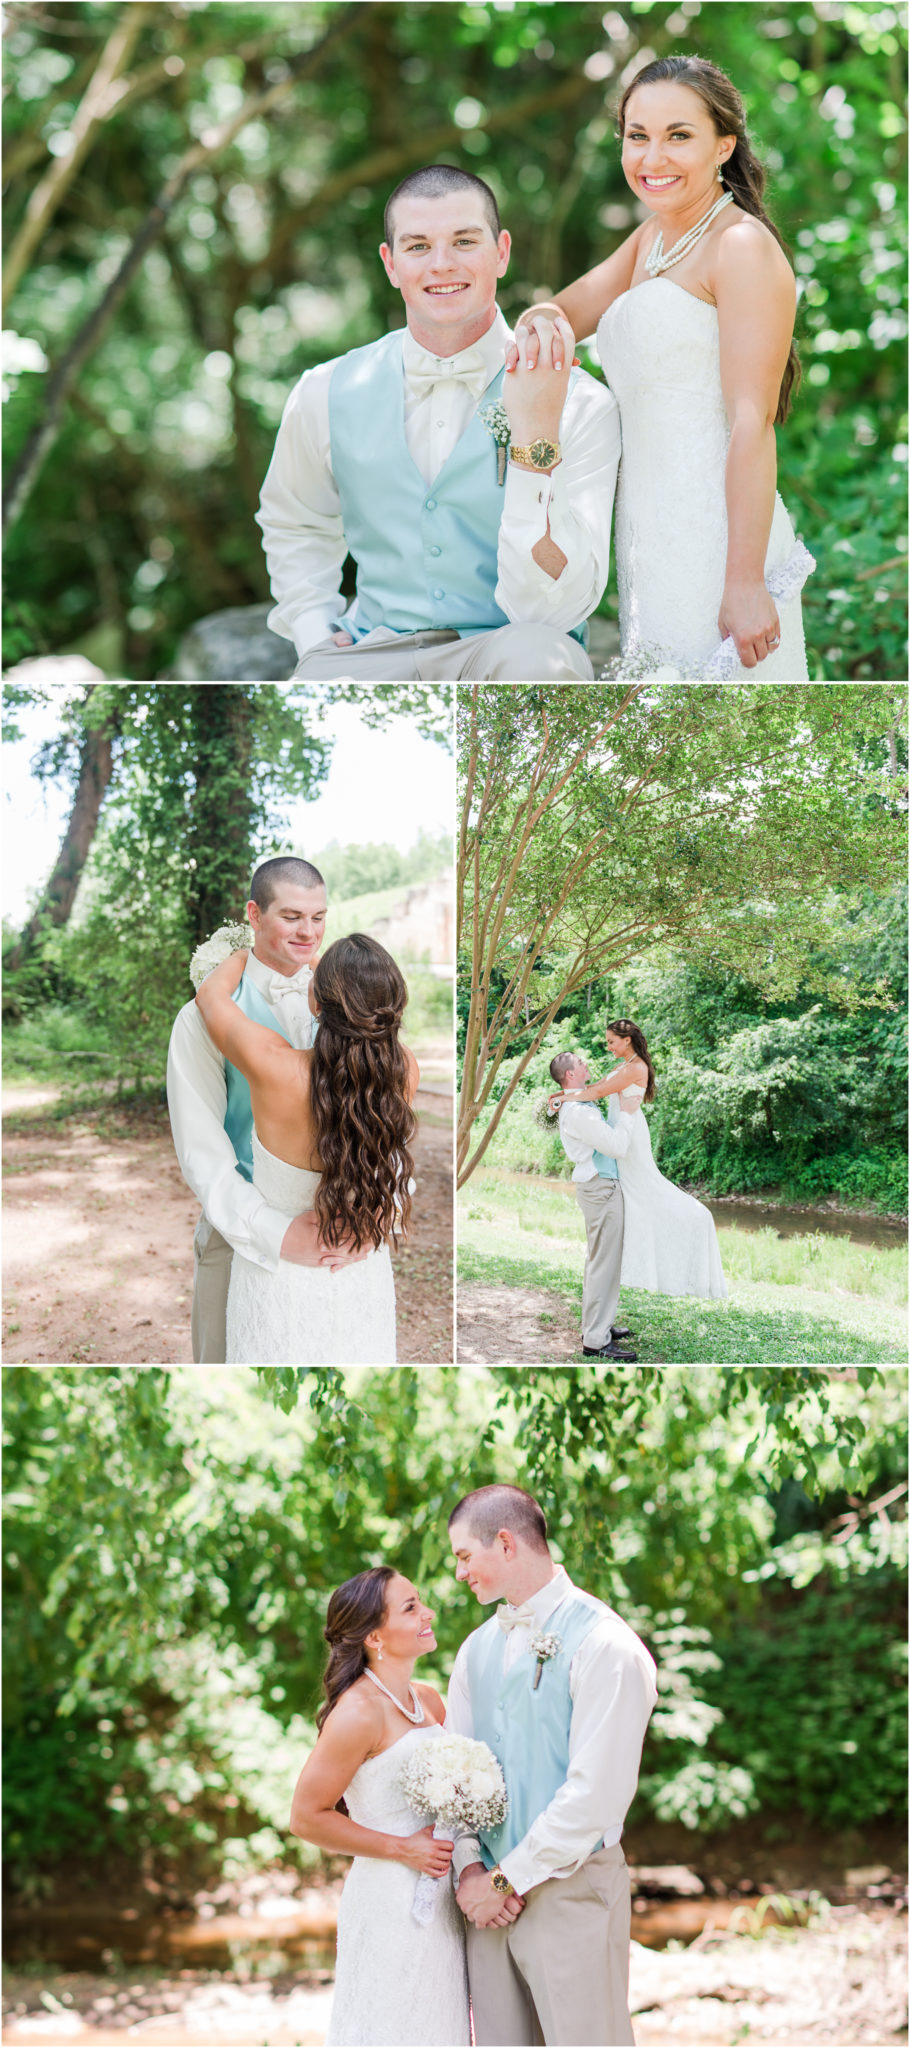 Outdoor Bride and Groom photos in Williamston, South Carolina.